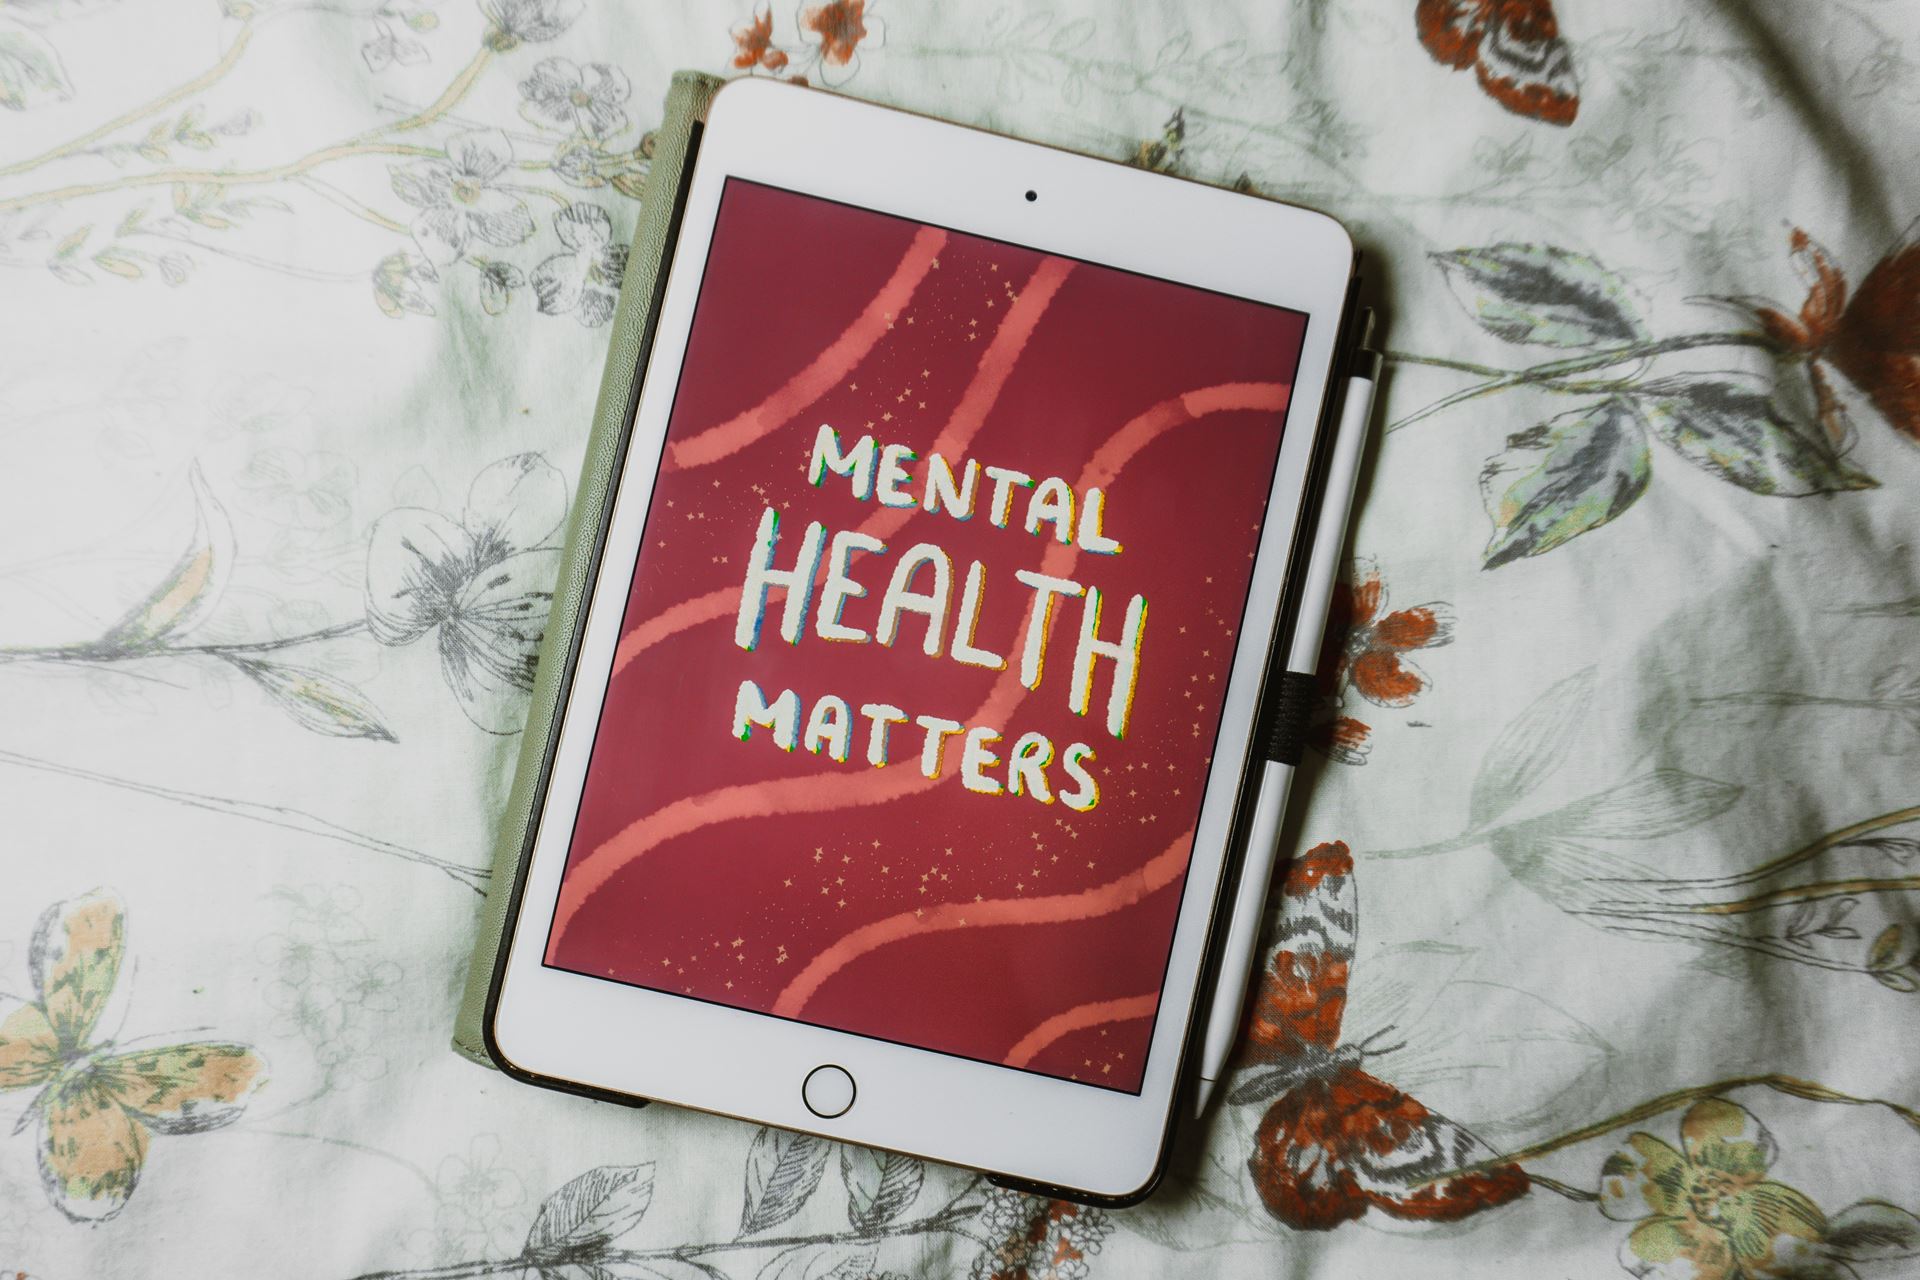 mental health matters wording on an ipad